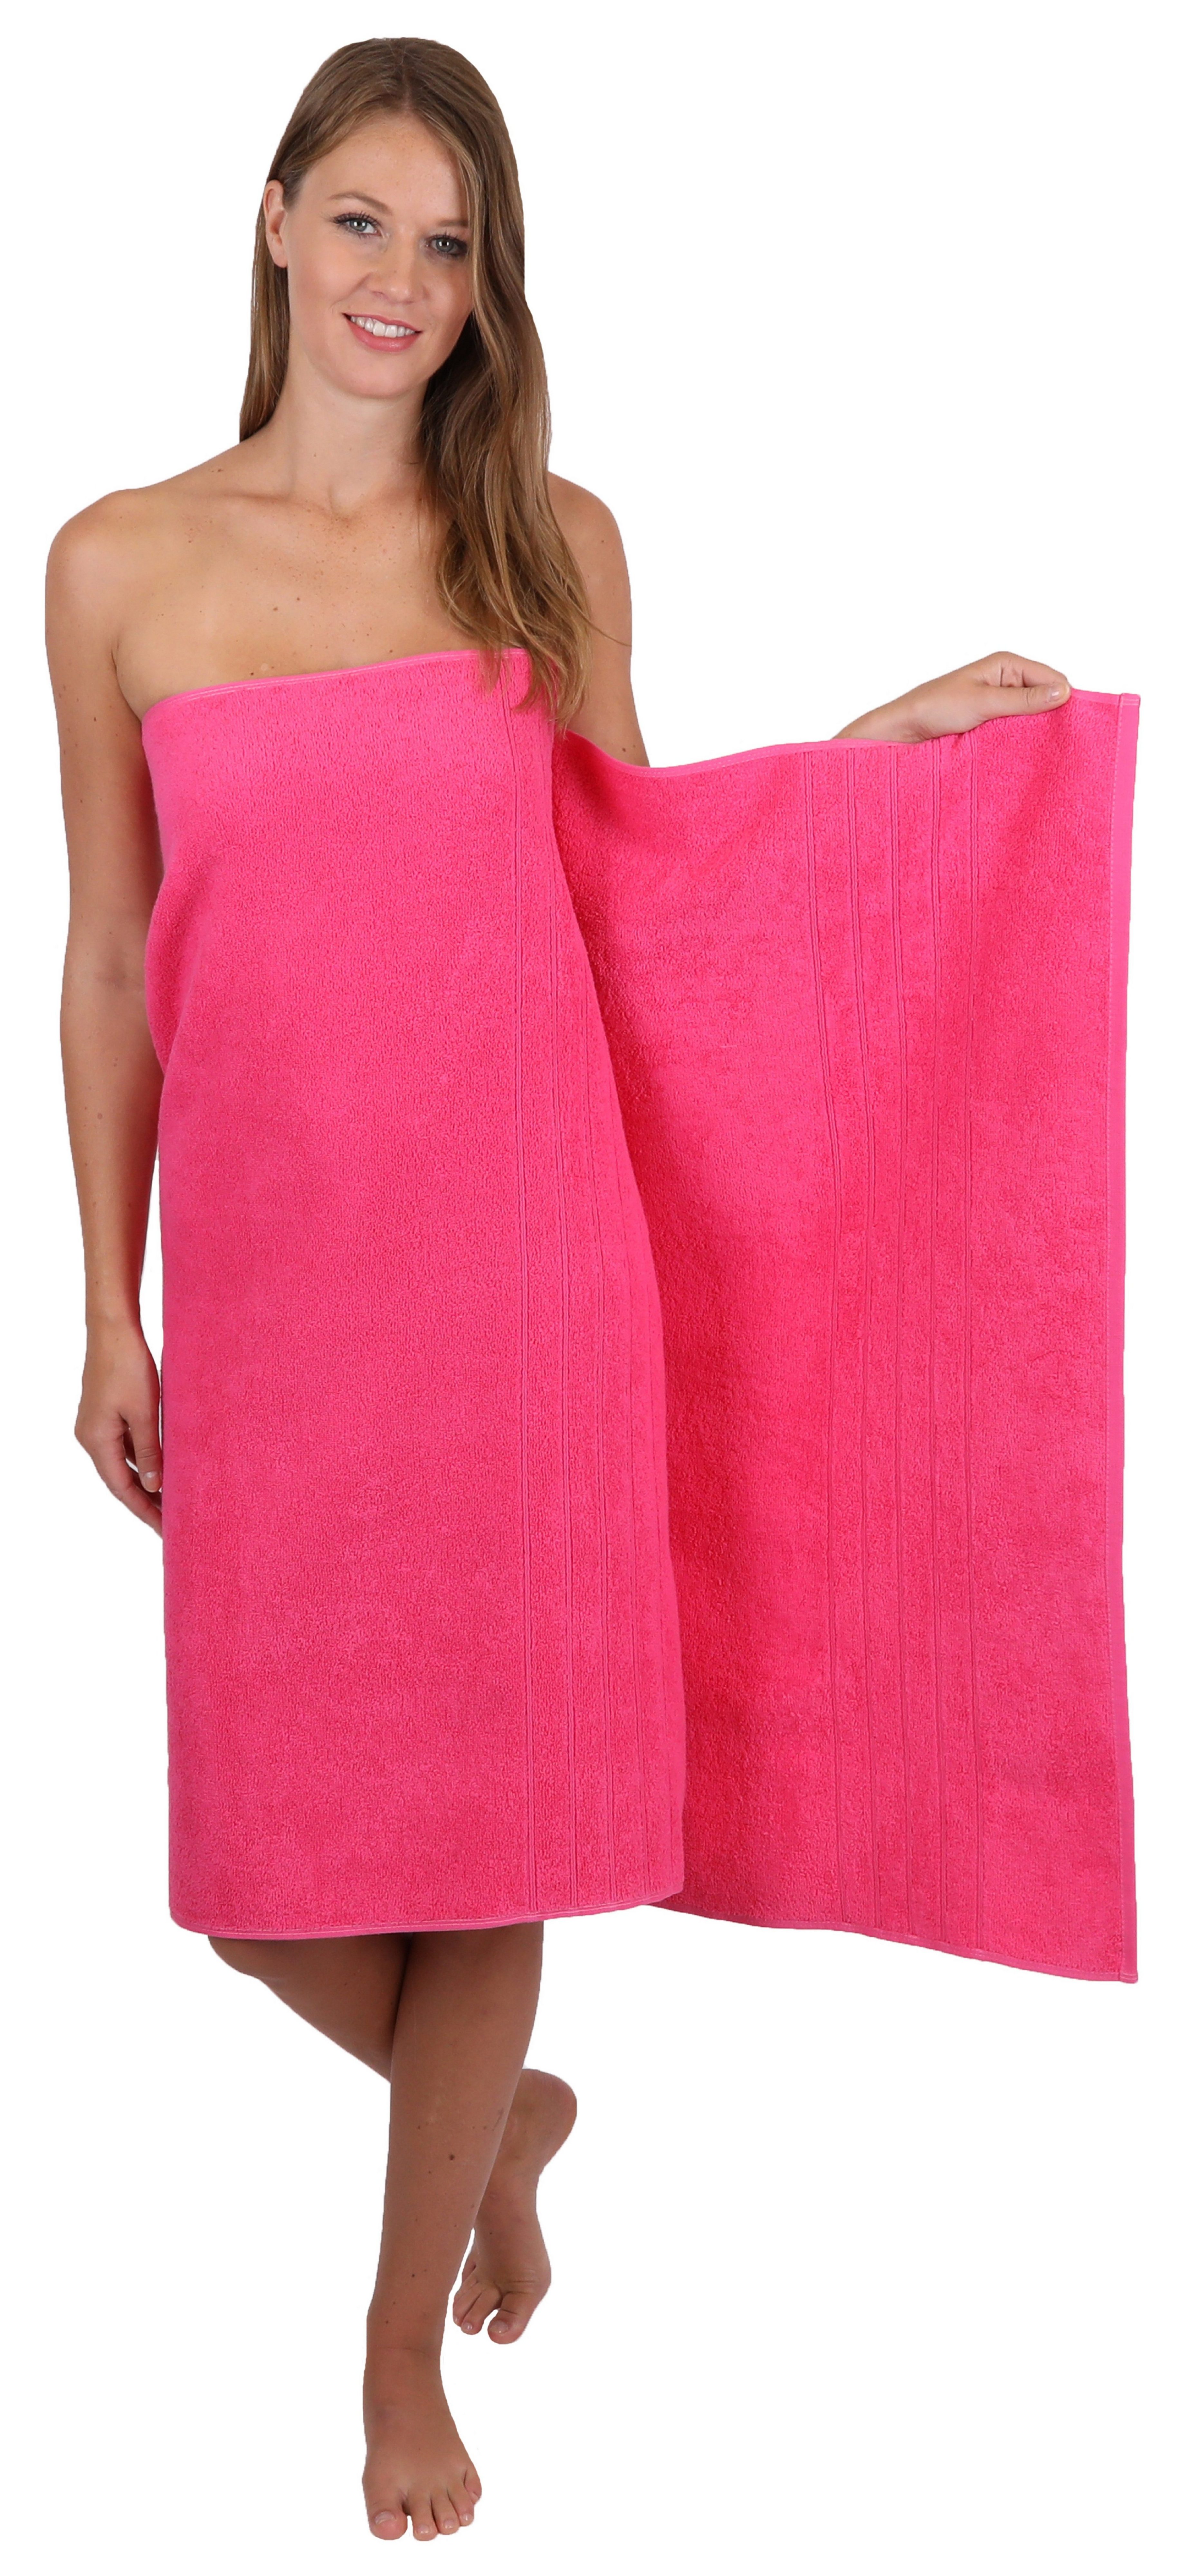 Badetücher Handtuch Handtücher 2 2 Seiftücher Baumwolle, Set Deluxe (8-tlg) weiß Fuchsia, 100% 2 8-TLG. Baumwolle 2 100% und Duschtücher Handtuch-Set Betz Farbe